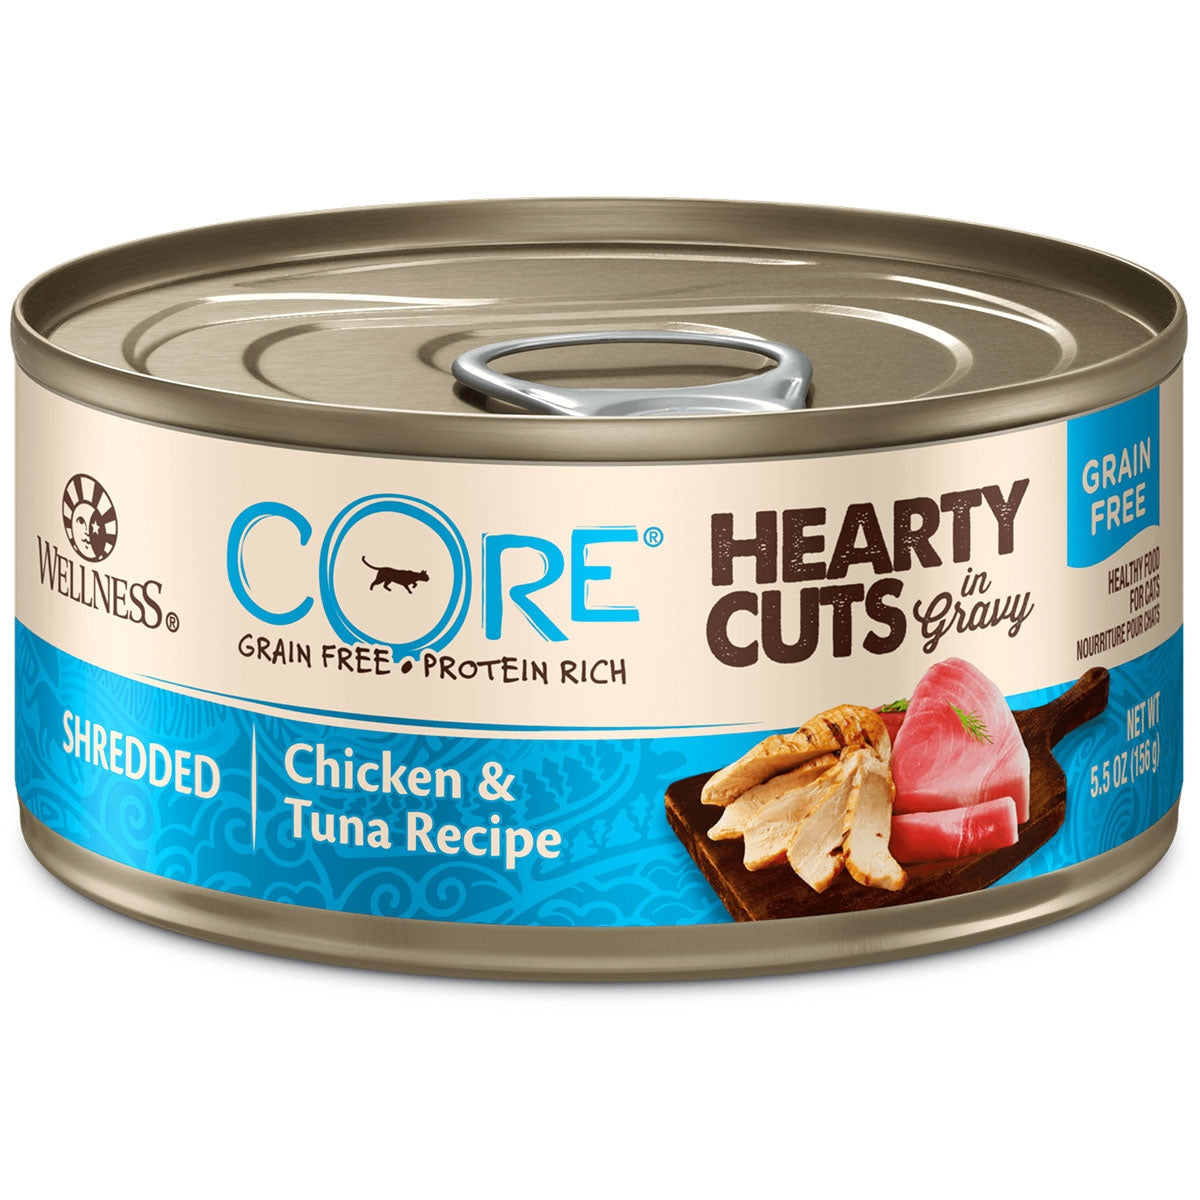 Wellness CORE Hearty Cuts for Cats - Grain Free Chicken & Tuna can 5.5oz